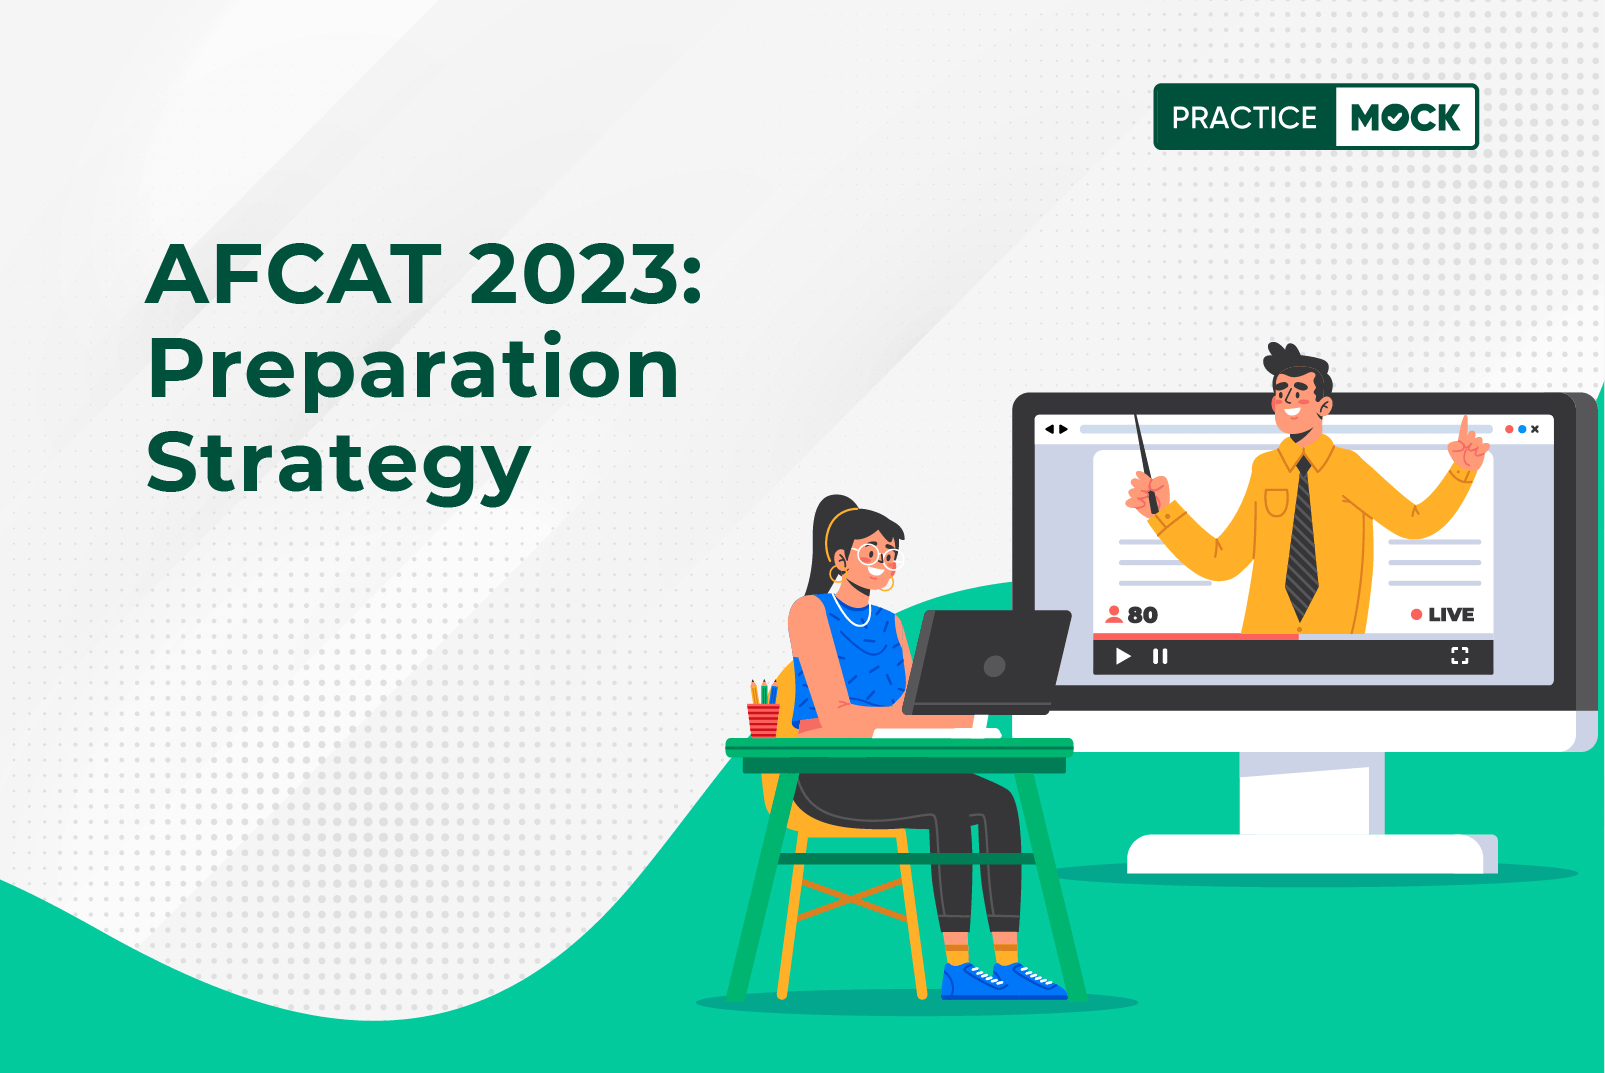 AFCAT 2023: Preparation Strategy